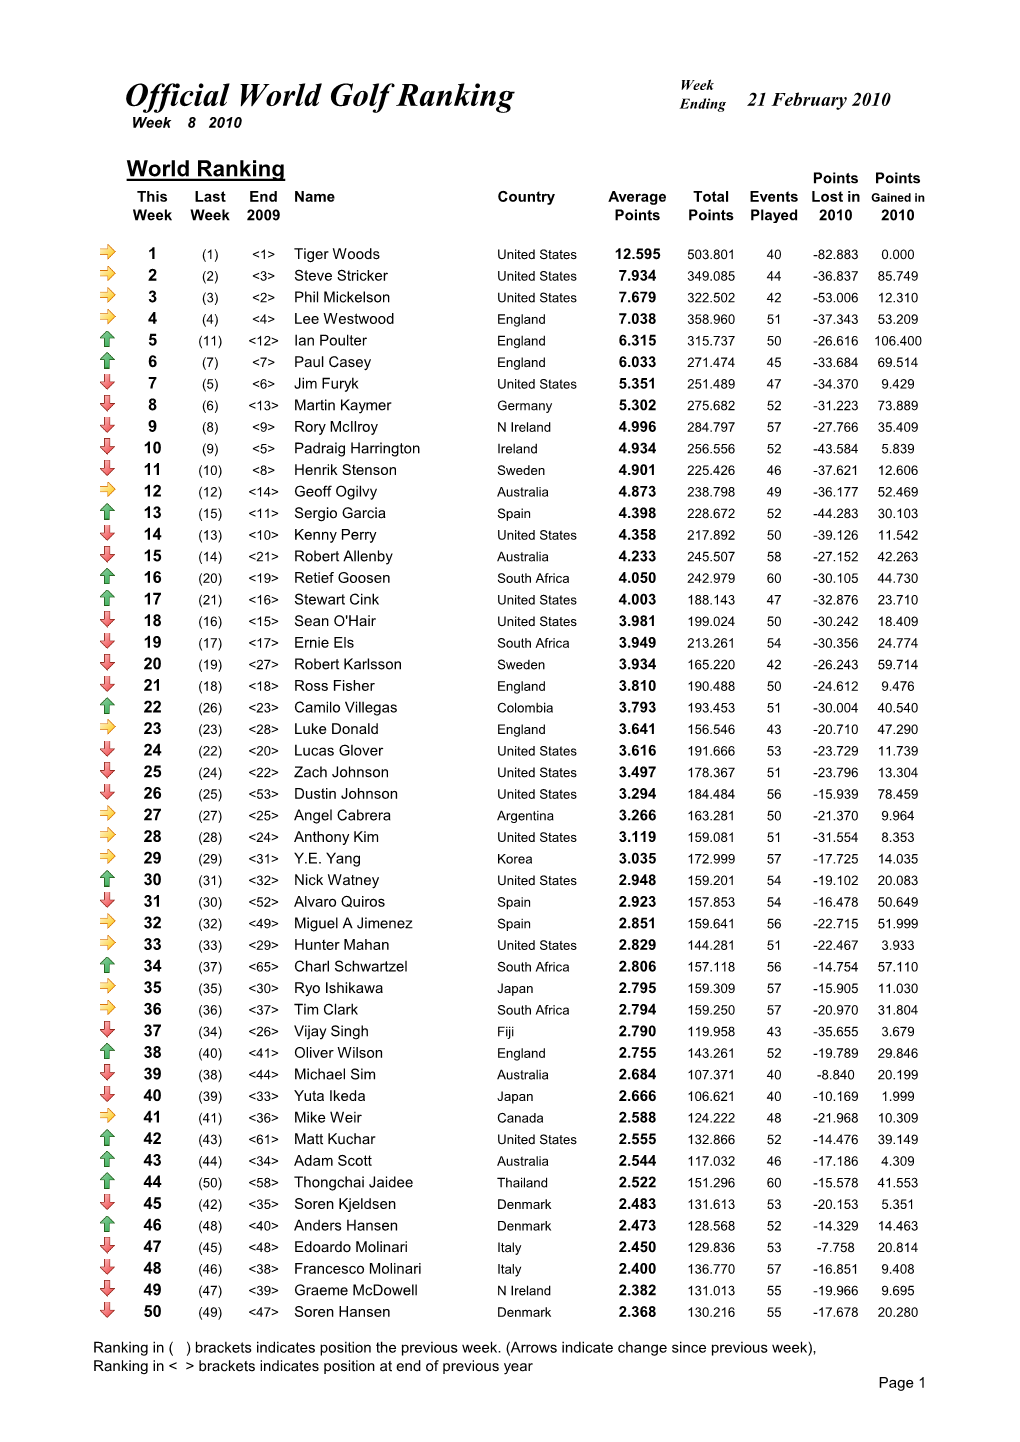 Official World Golf Ranking Ending 21 February 2010 Week 8 2010